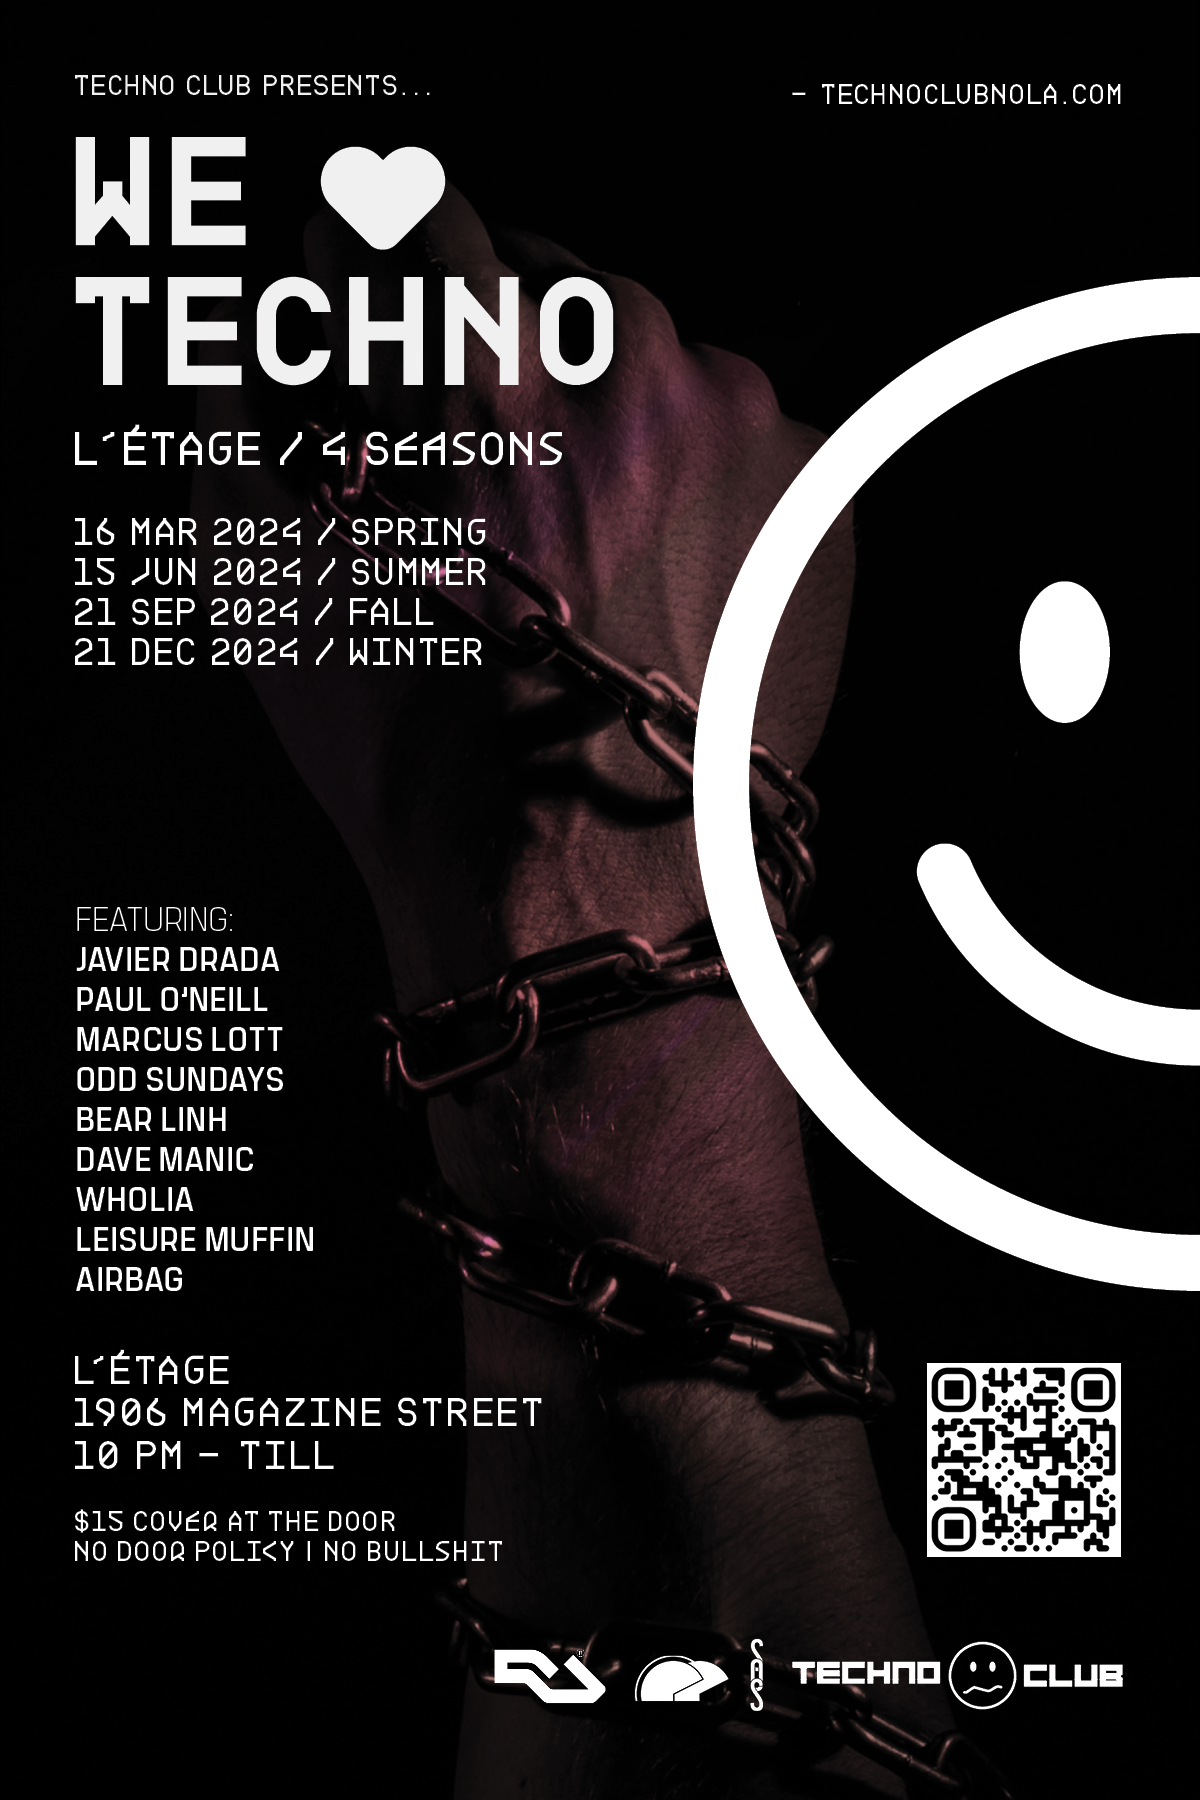 Techno Club presents We Love Techno 2.0 - Página trasera